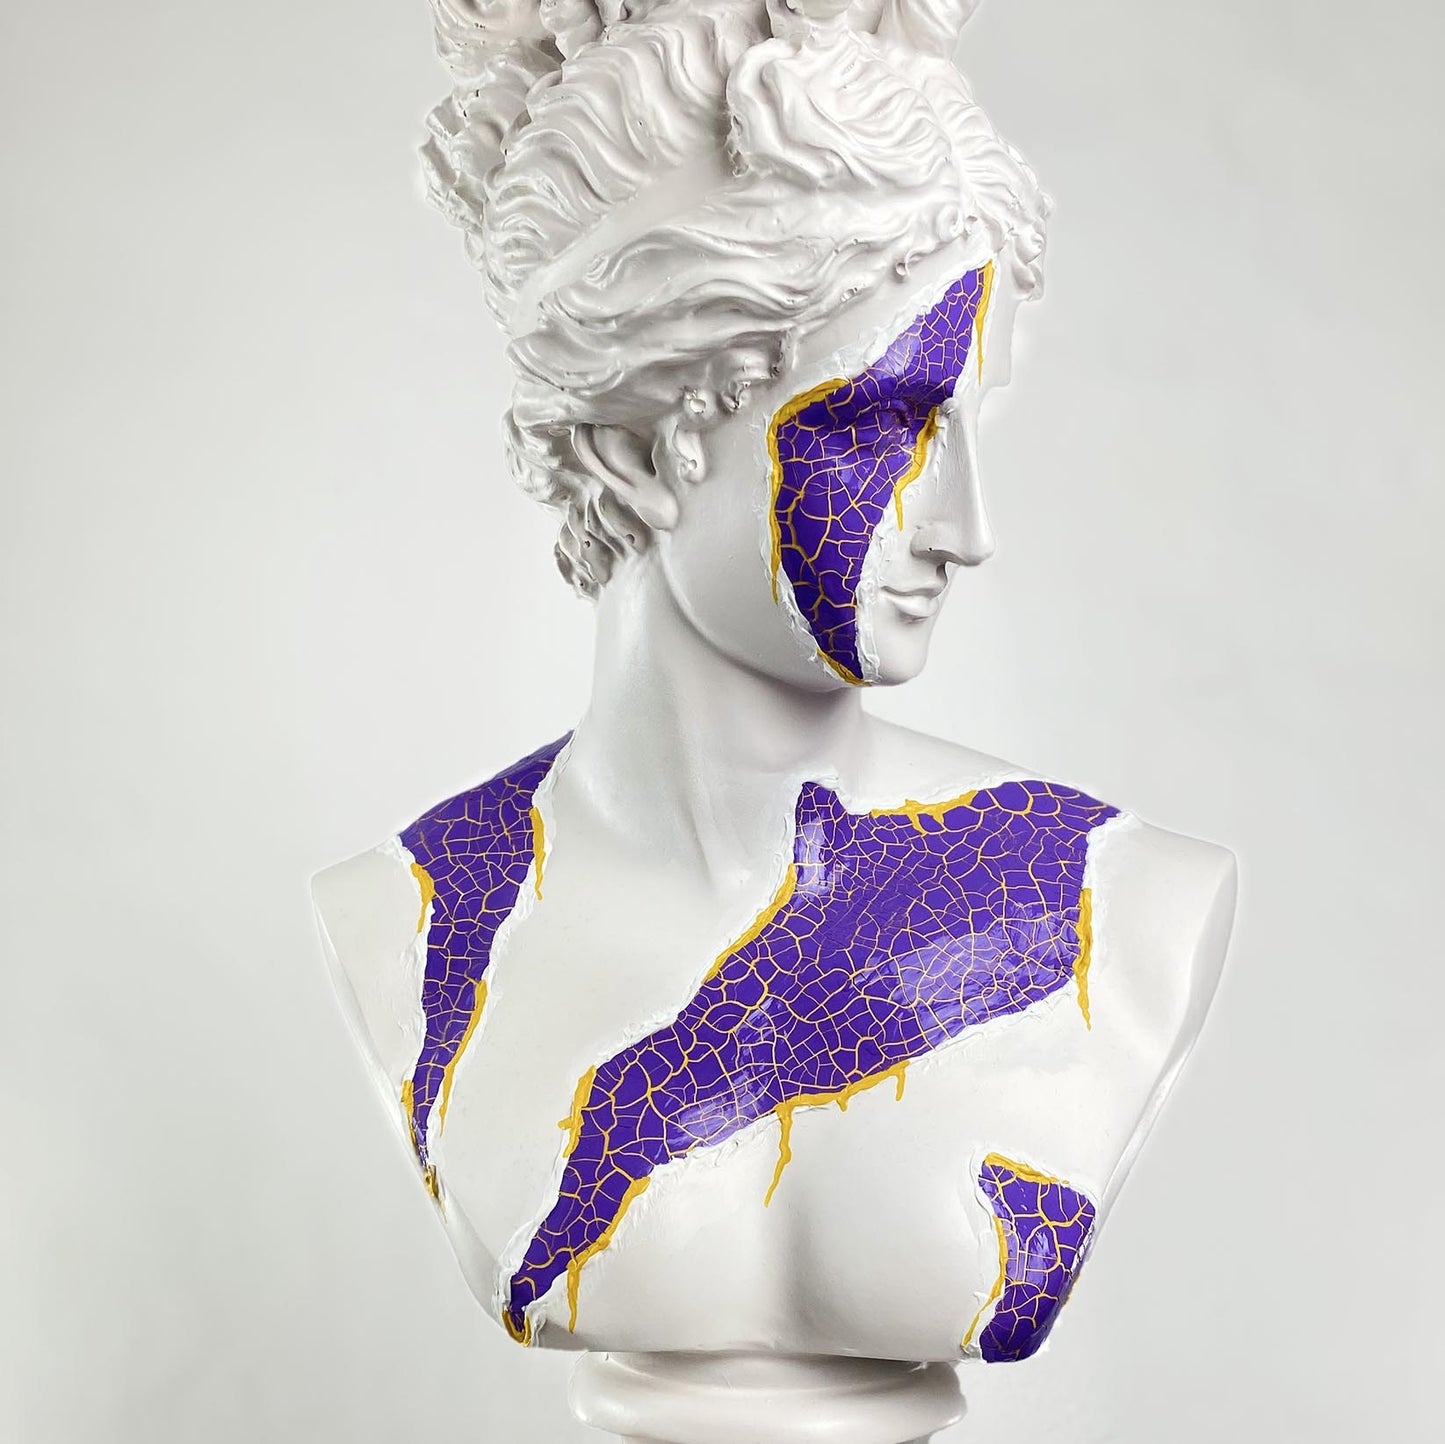 Diana 'Contagion' Pop Art Sculpture, Modern Home Decor